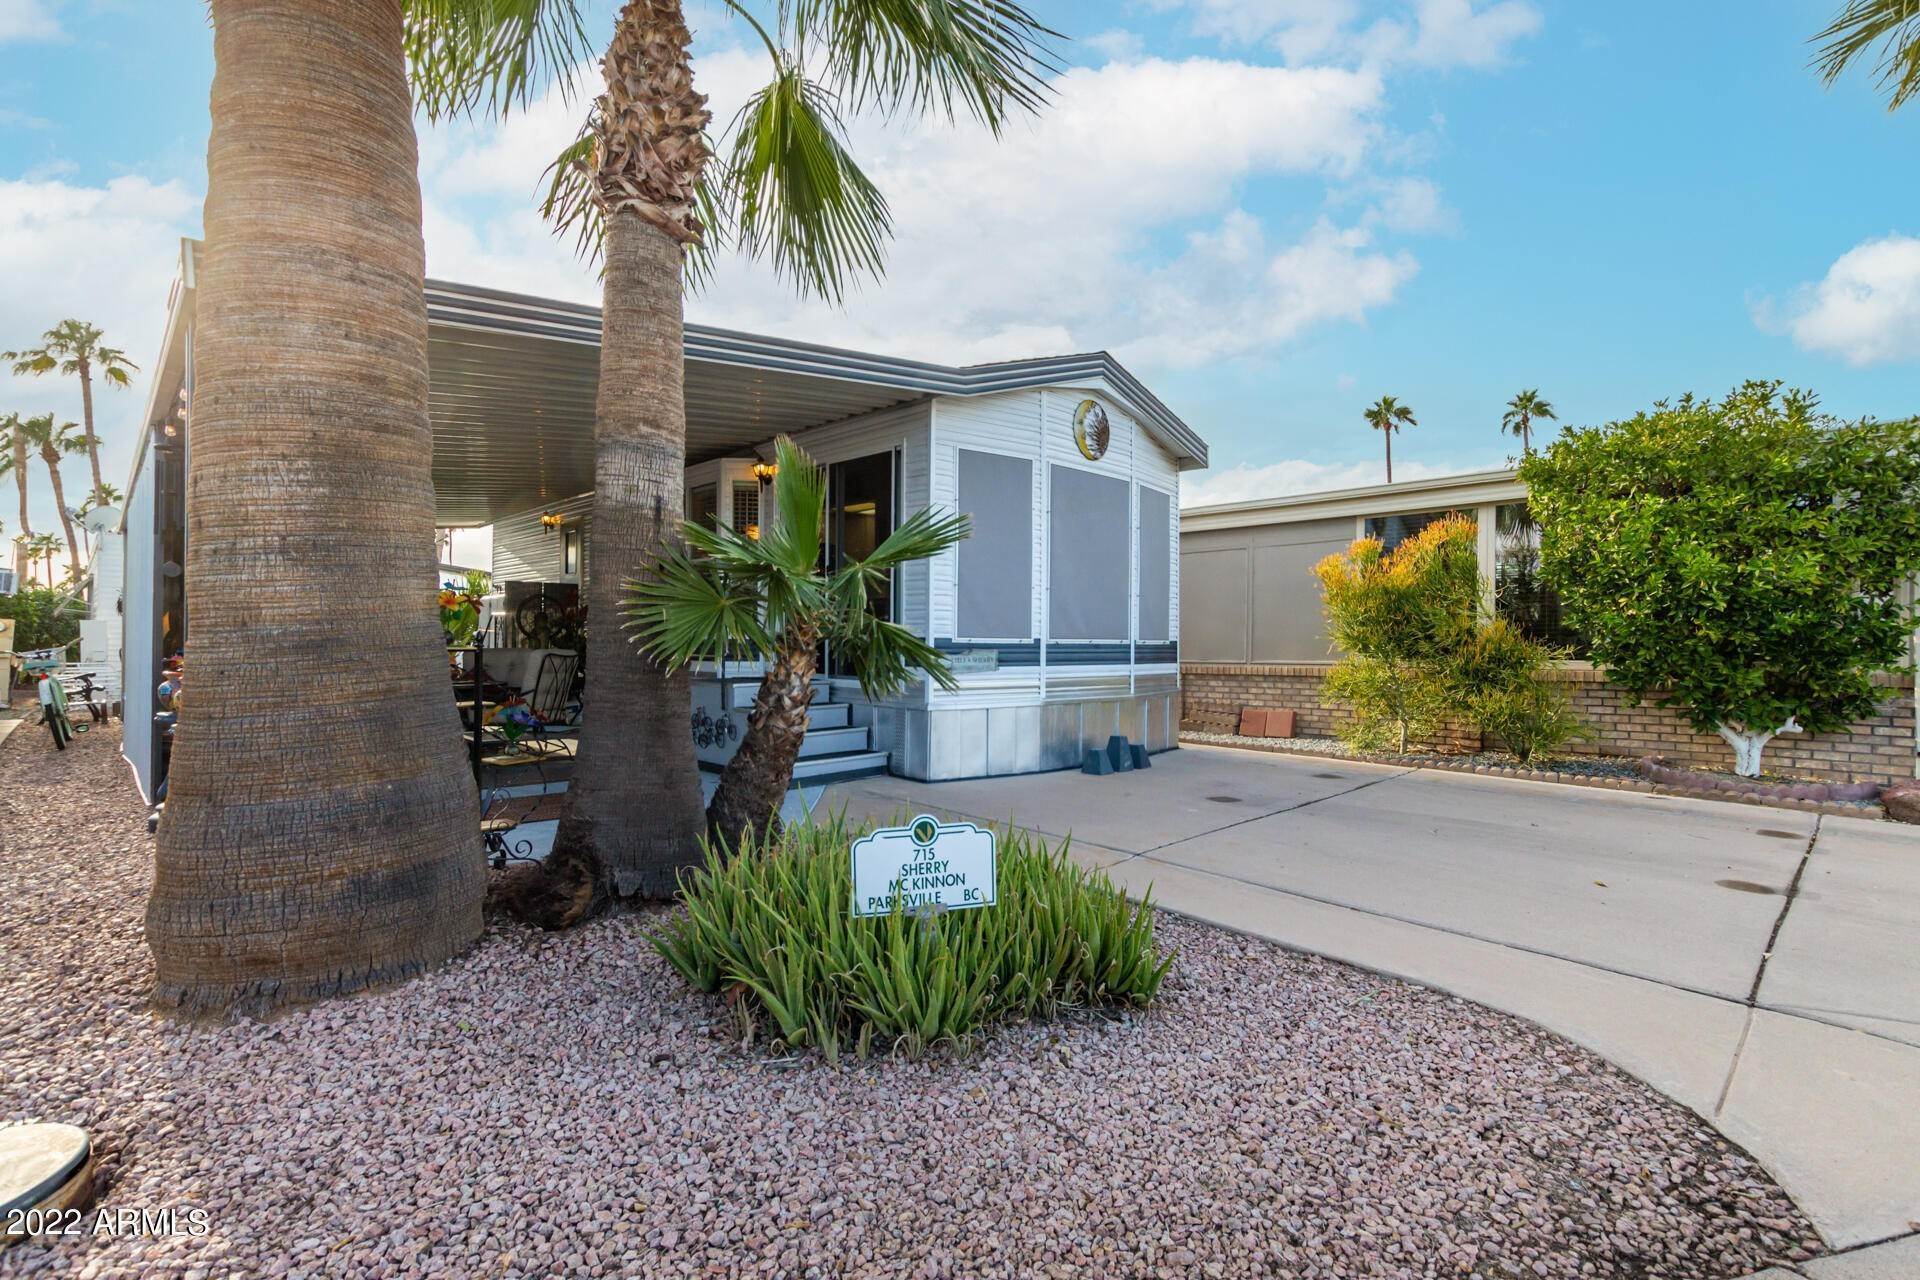 50. Mobile Home for Sale at Mesa, AZ 85205